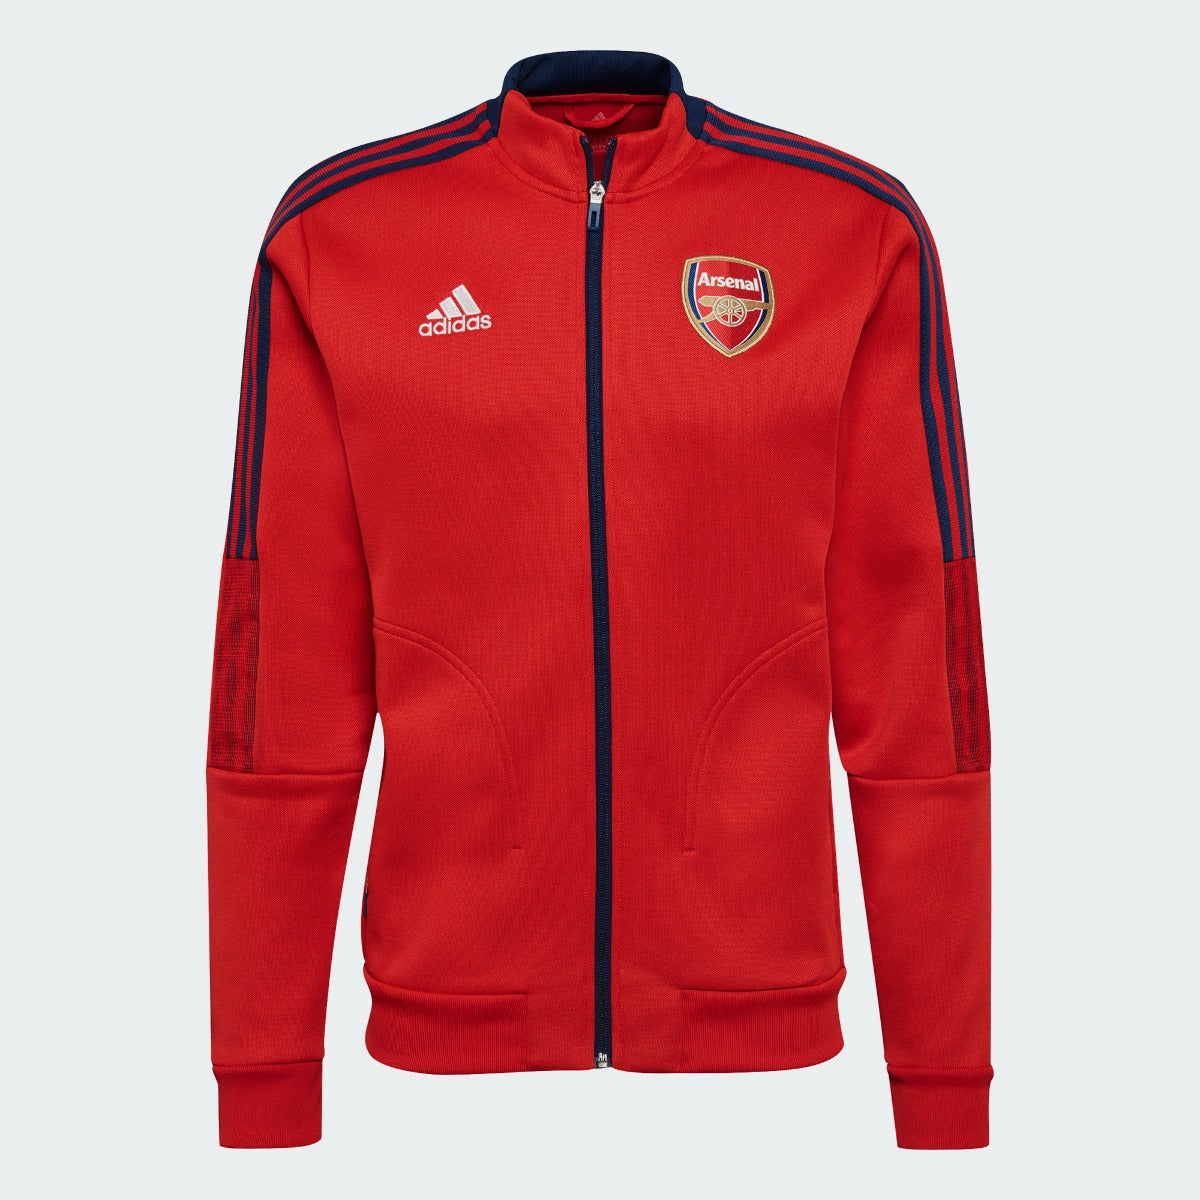 Adidas 2021-22 Arsenal Anthem Jacket - Red-Navy (Front)